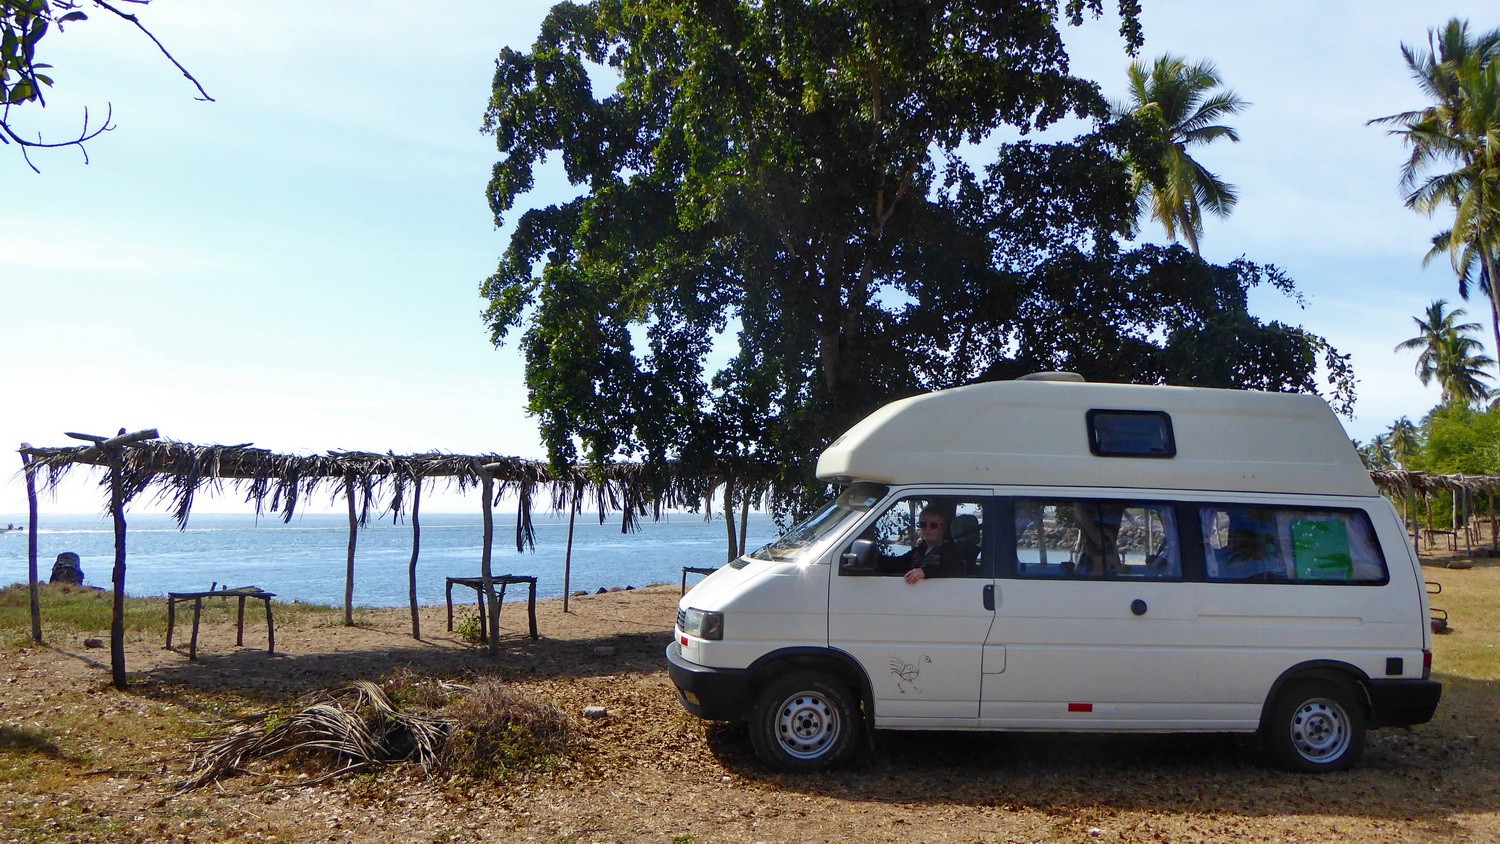 Our campsite Playa las Lupitas on the beach of Teacapan